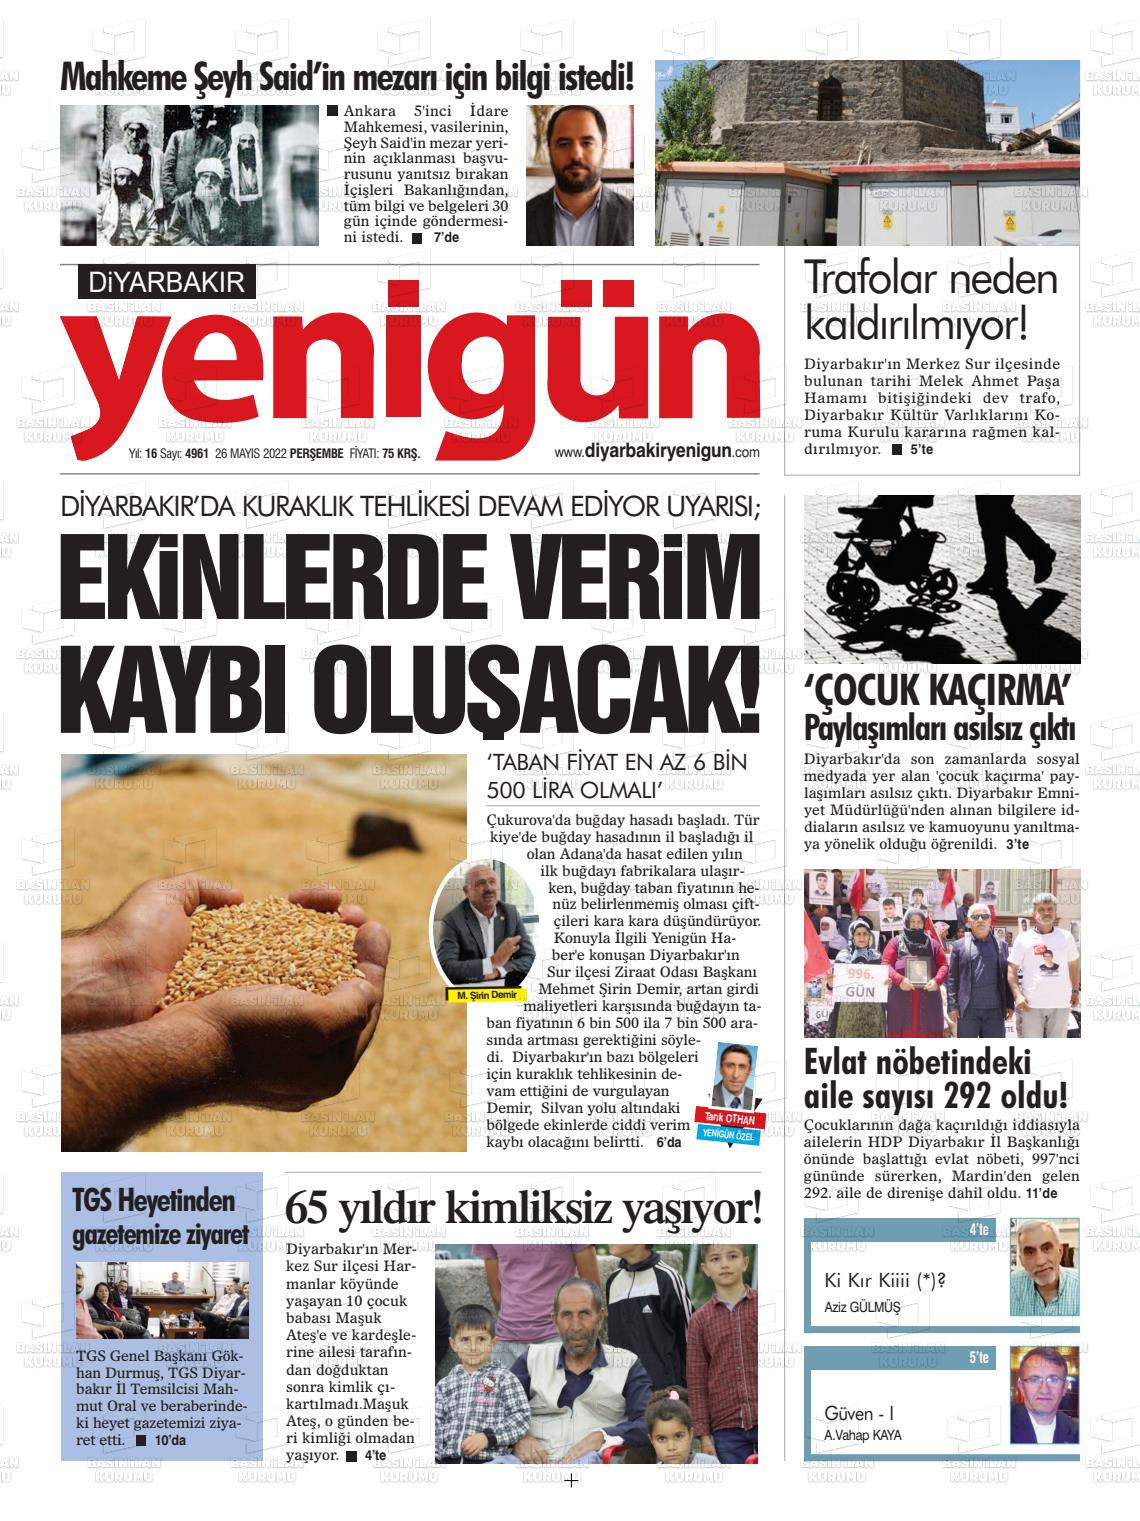 26 Mayıs 2022 Diyarbakır Yenigün Gazete Manşeti